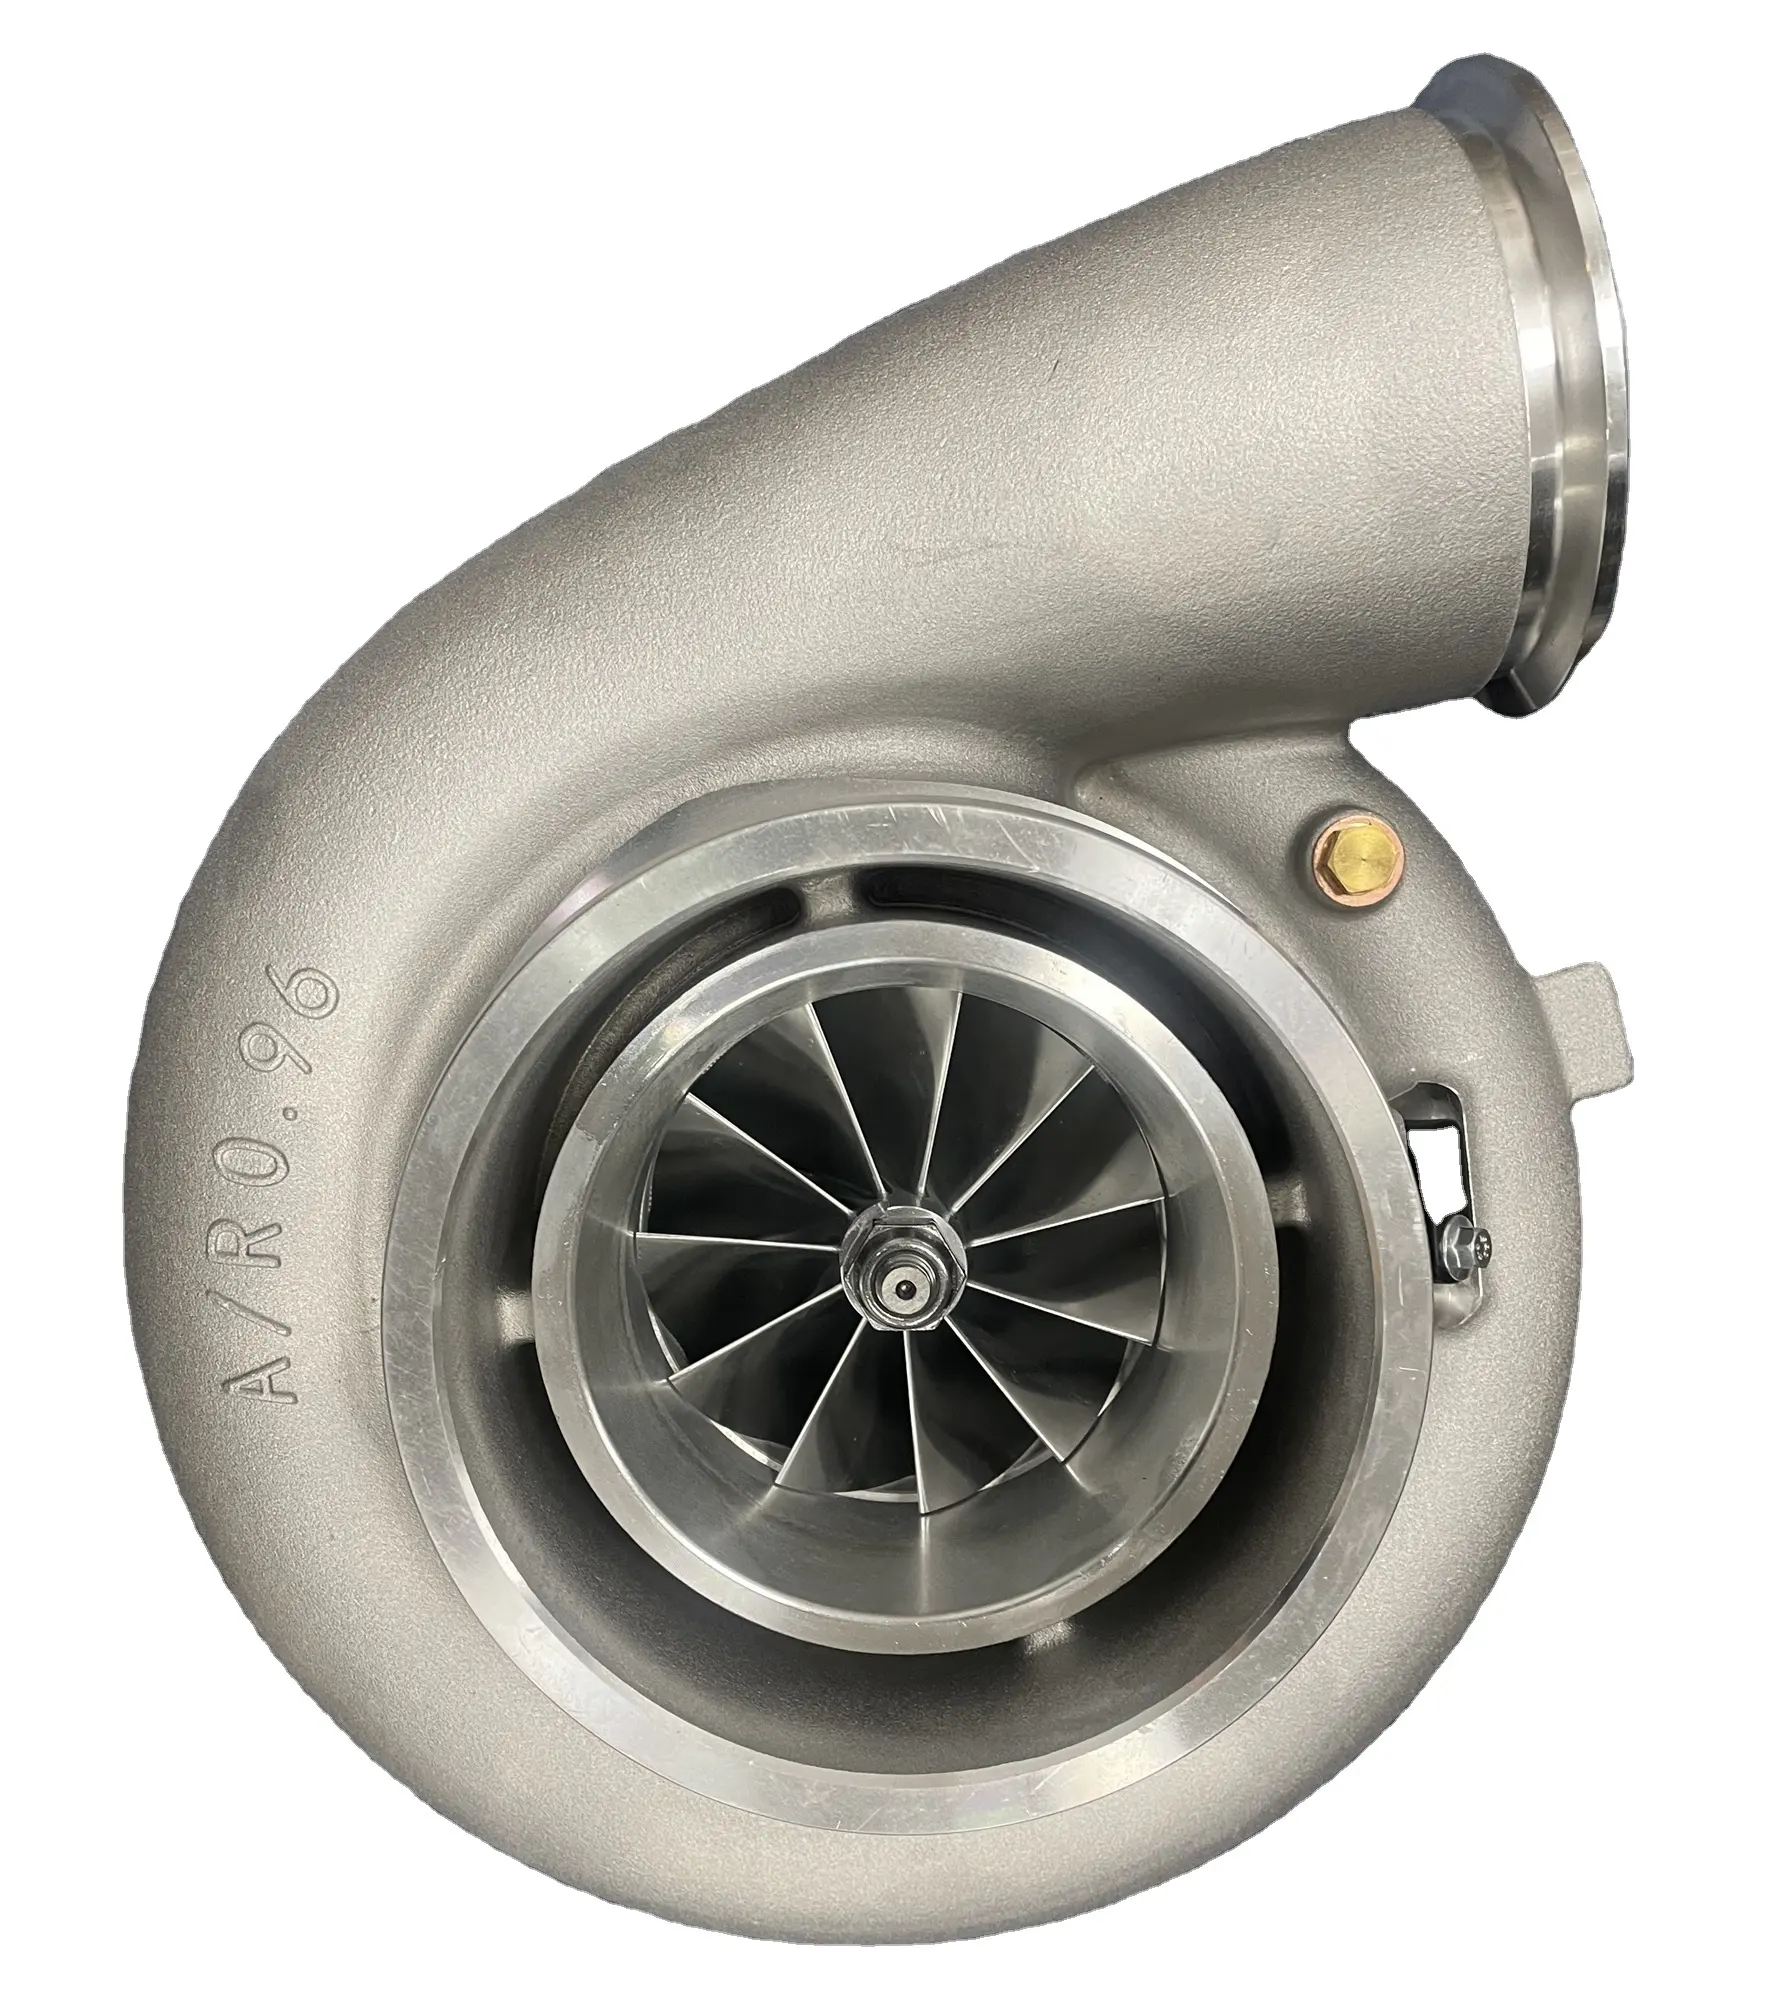 Turbolader GTX55 94mm mit 1,15 AR Turbinen gehäuse Doppellager-Turbo